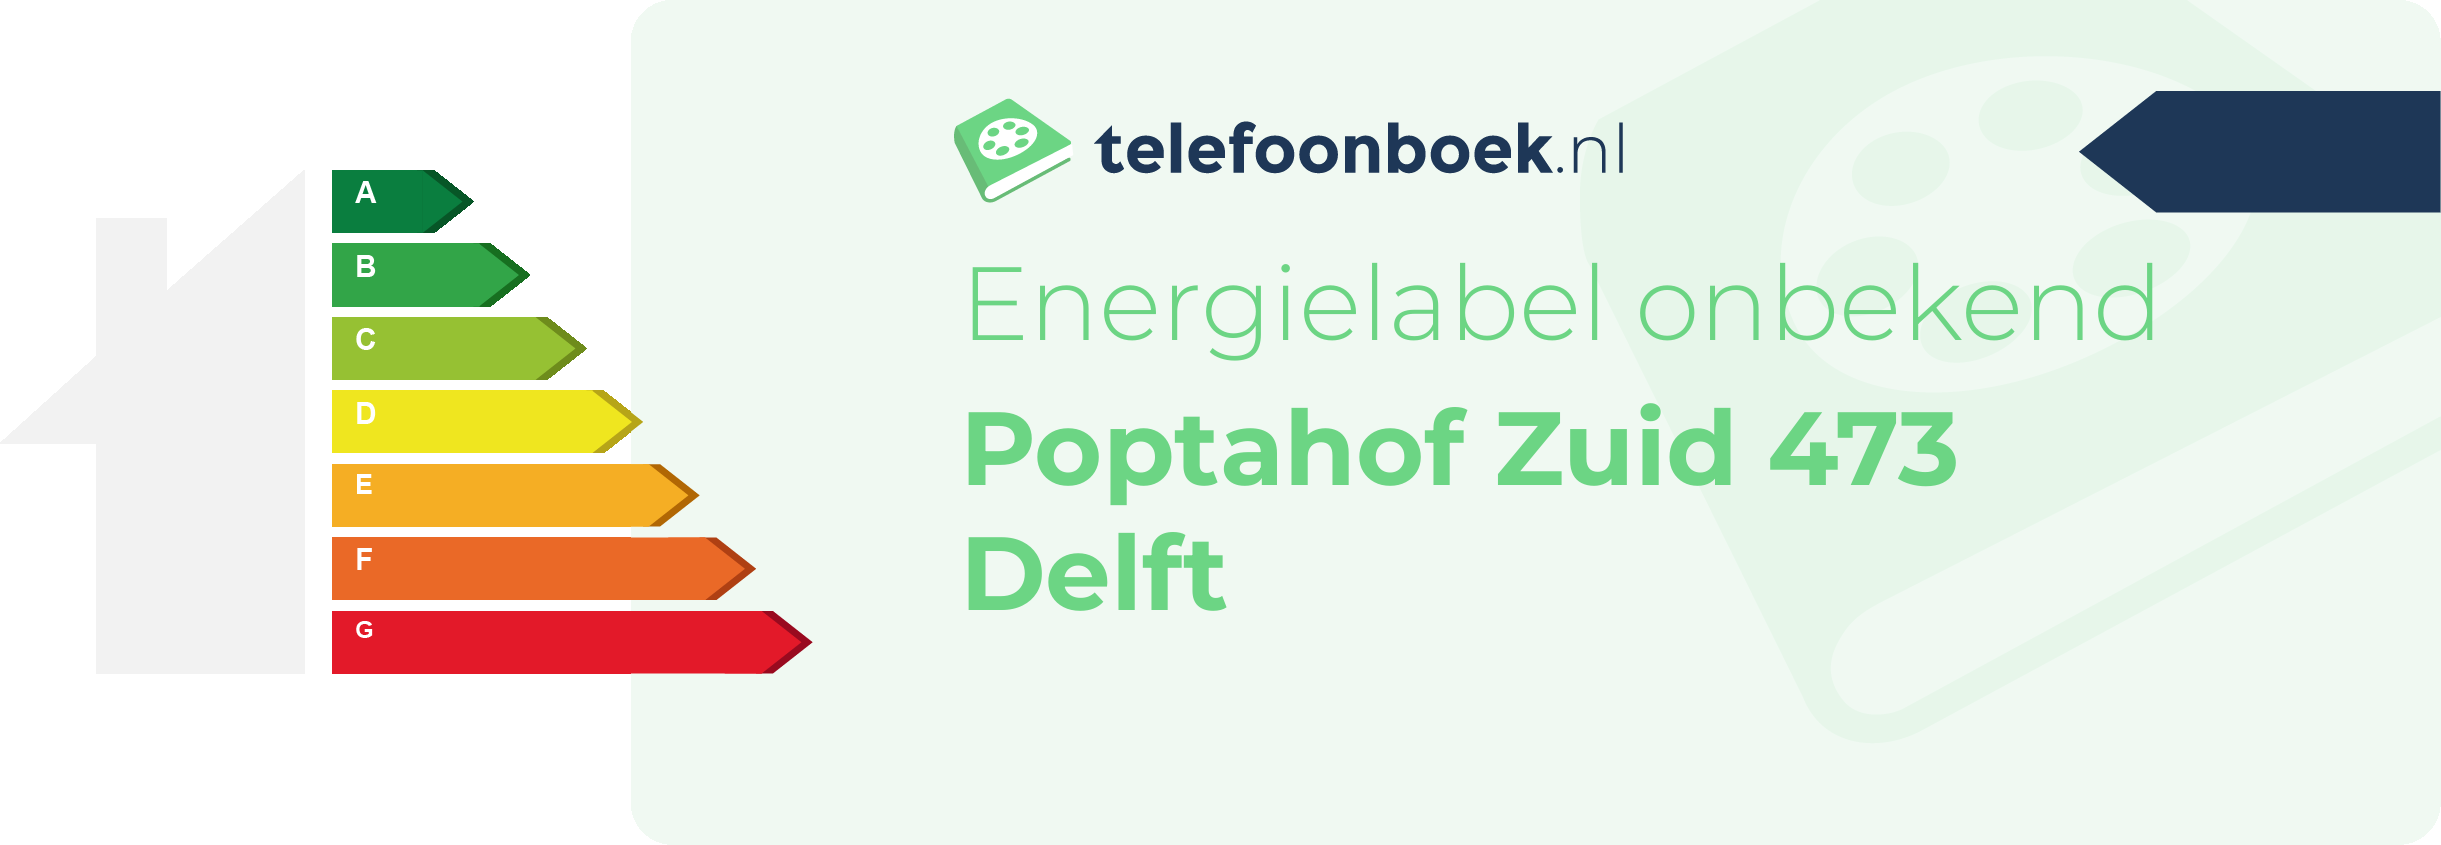 Energielabel Poptahof Zuid 473 Delft